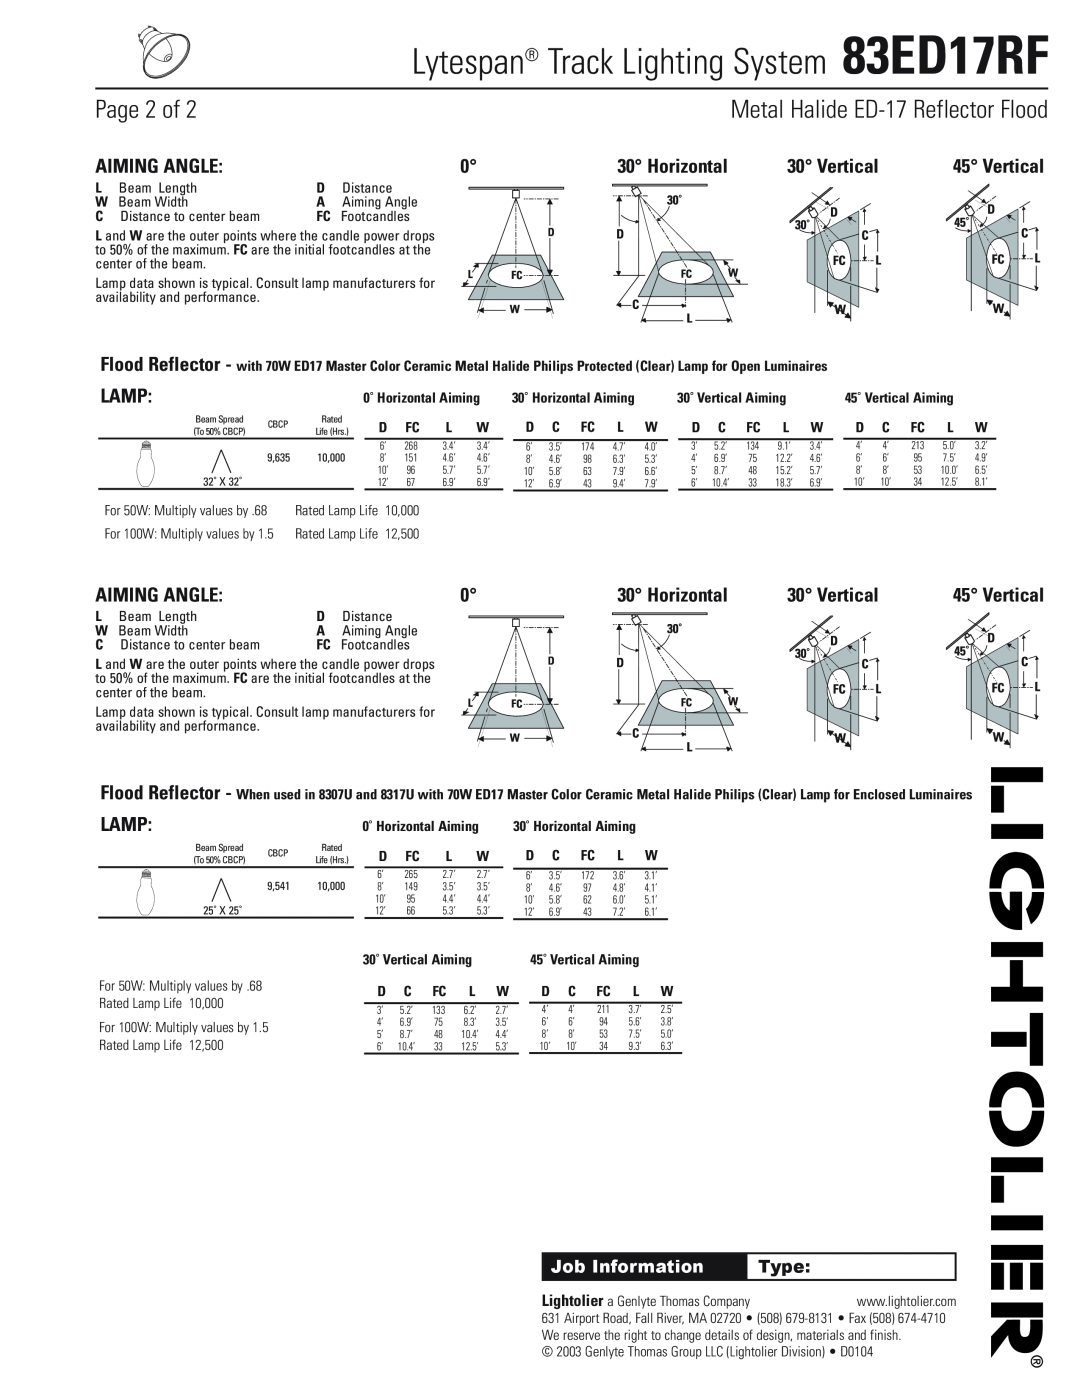 Lightolier manual Lytespan Track Lighting System 83ED17RF, Page 2 of 